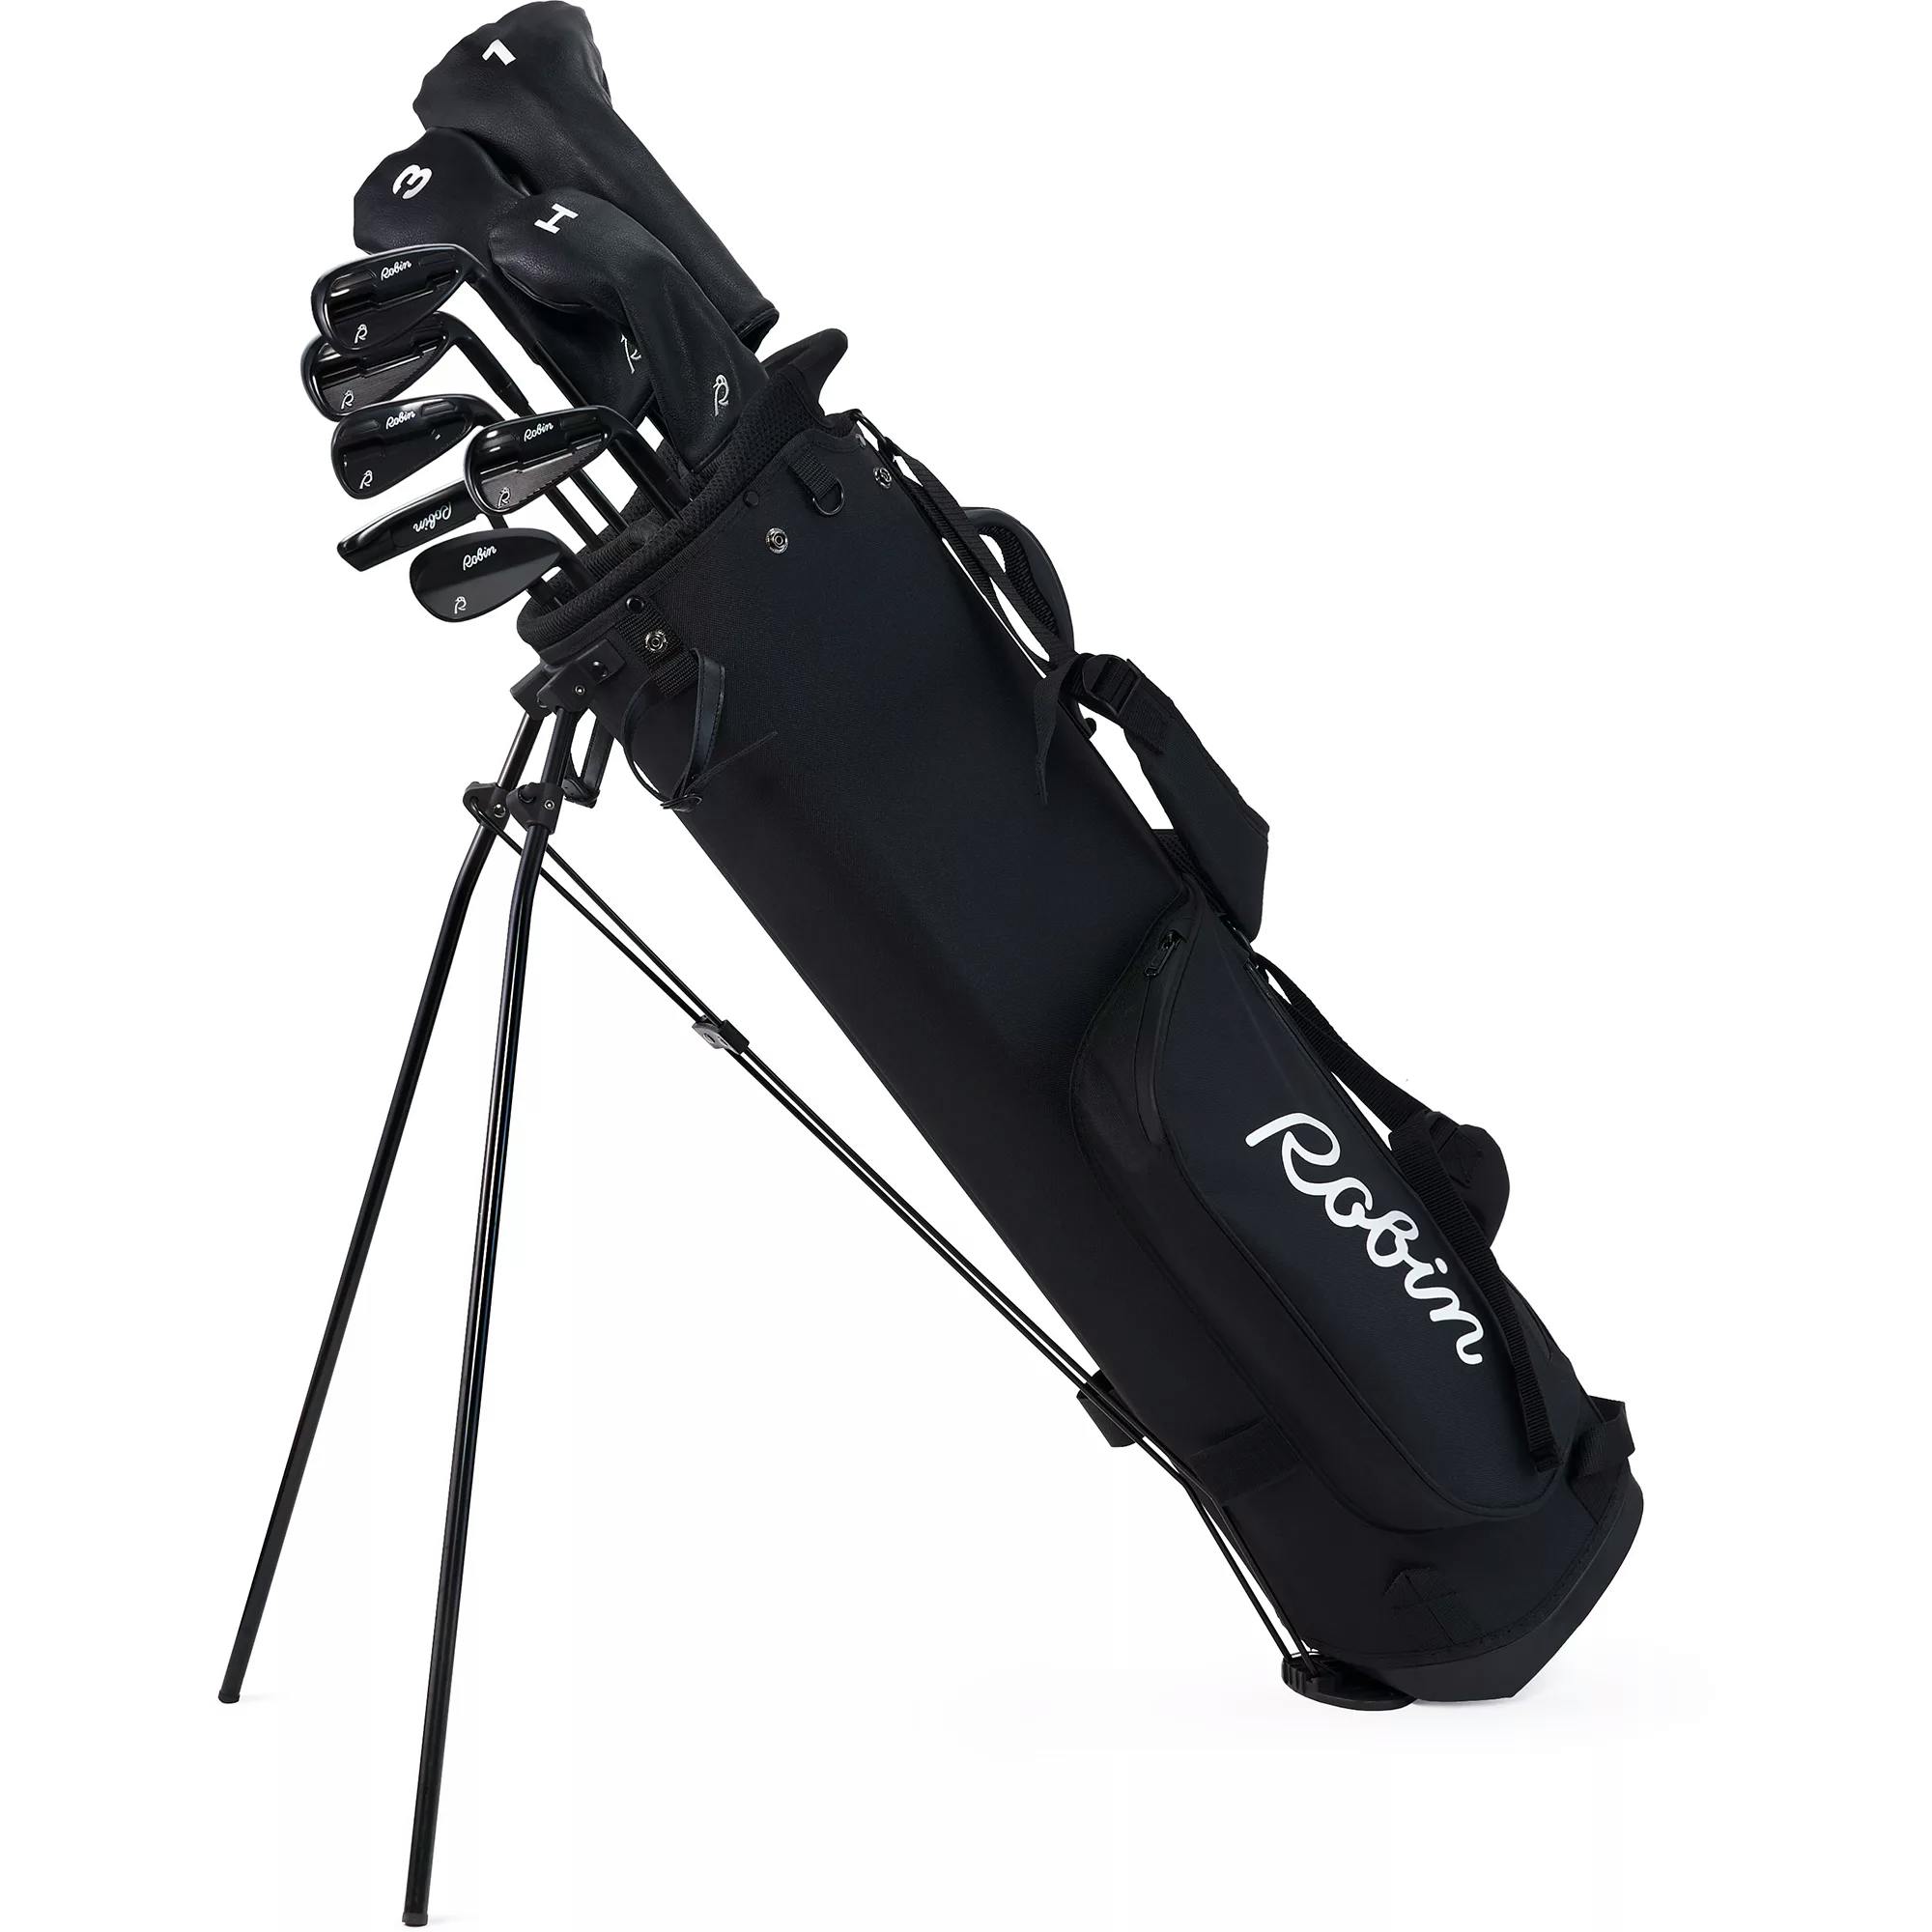 Robin Golf Men's Essentials 9-Club Golf Set (Bag + Head covers) · LH · Short